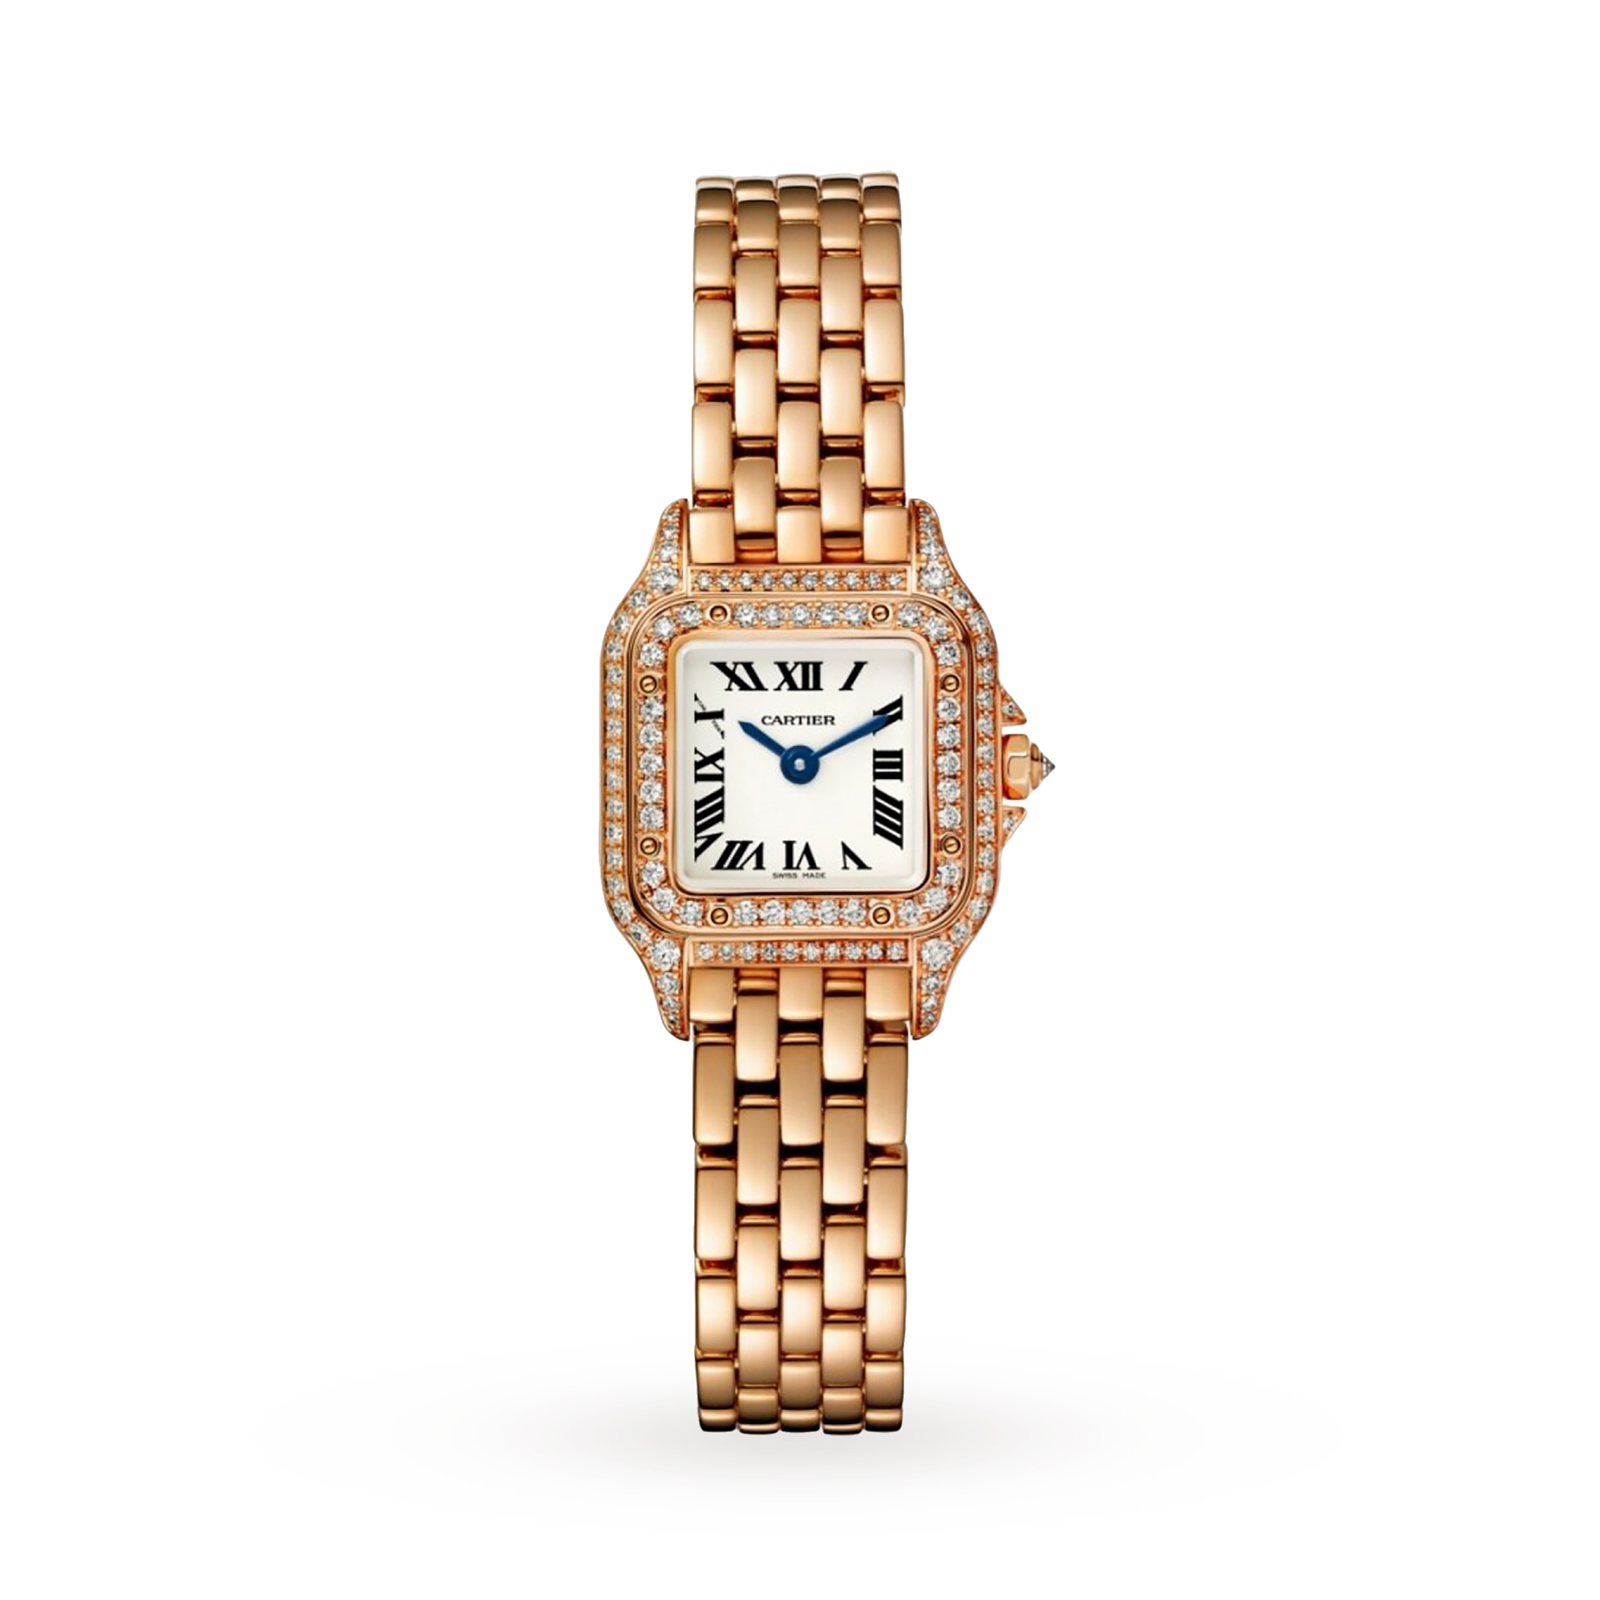 Panthère de Cartier watch, Mini, 18K rose gold, diamonds | Cartier ...